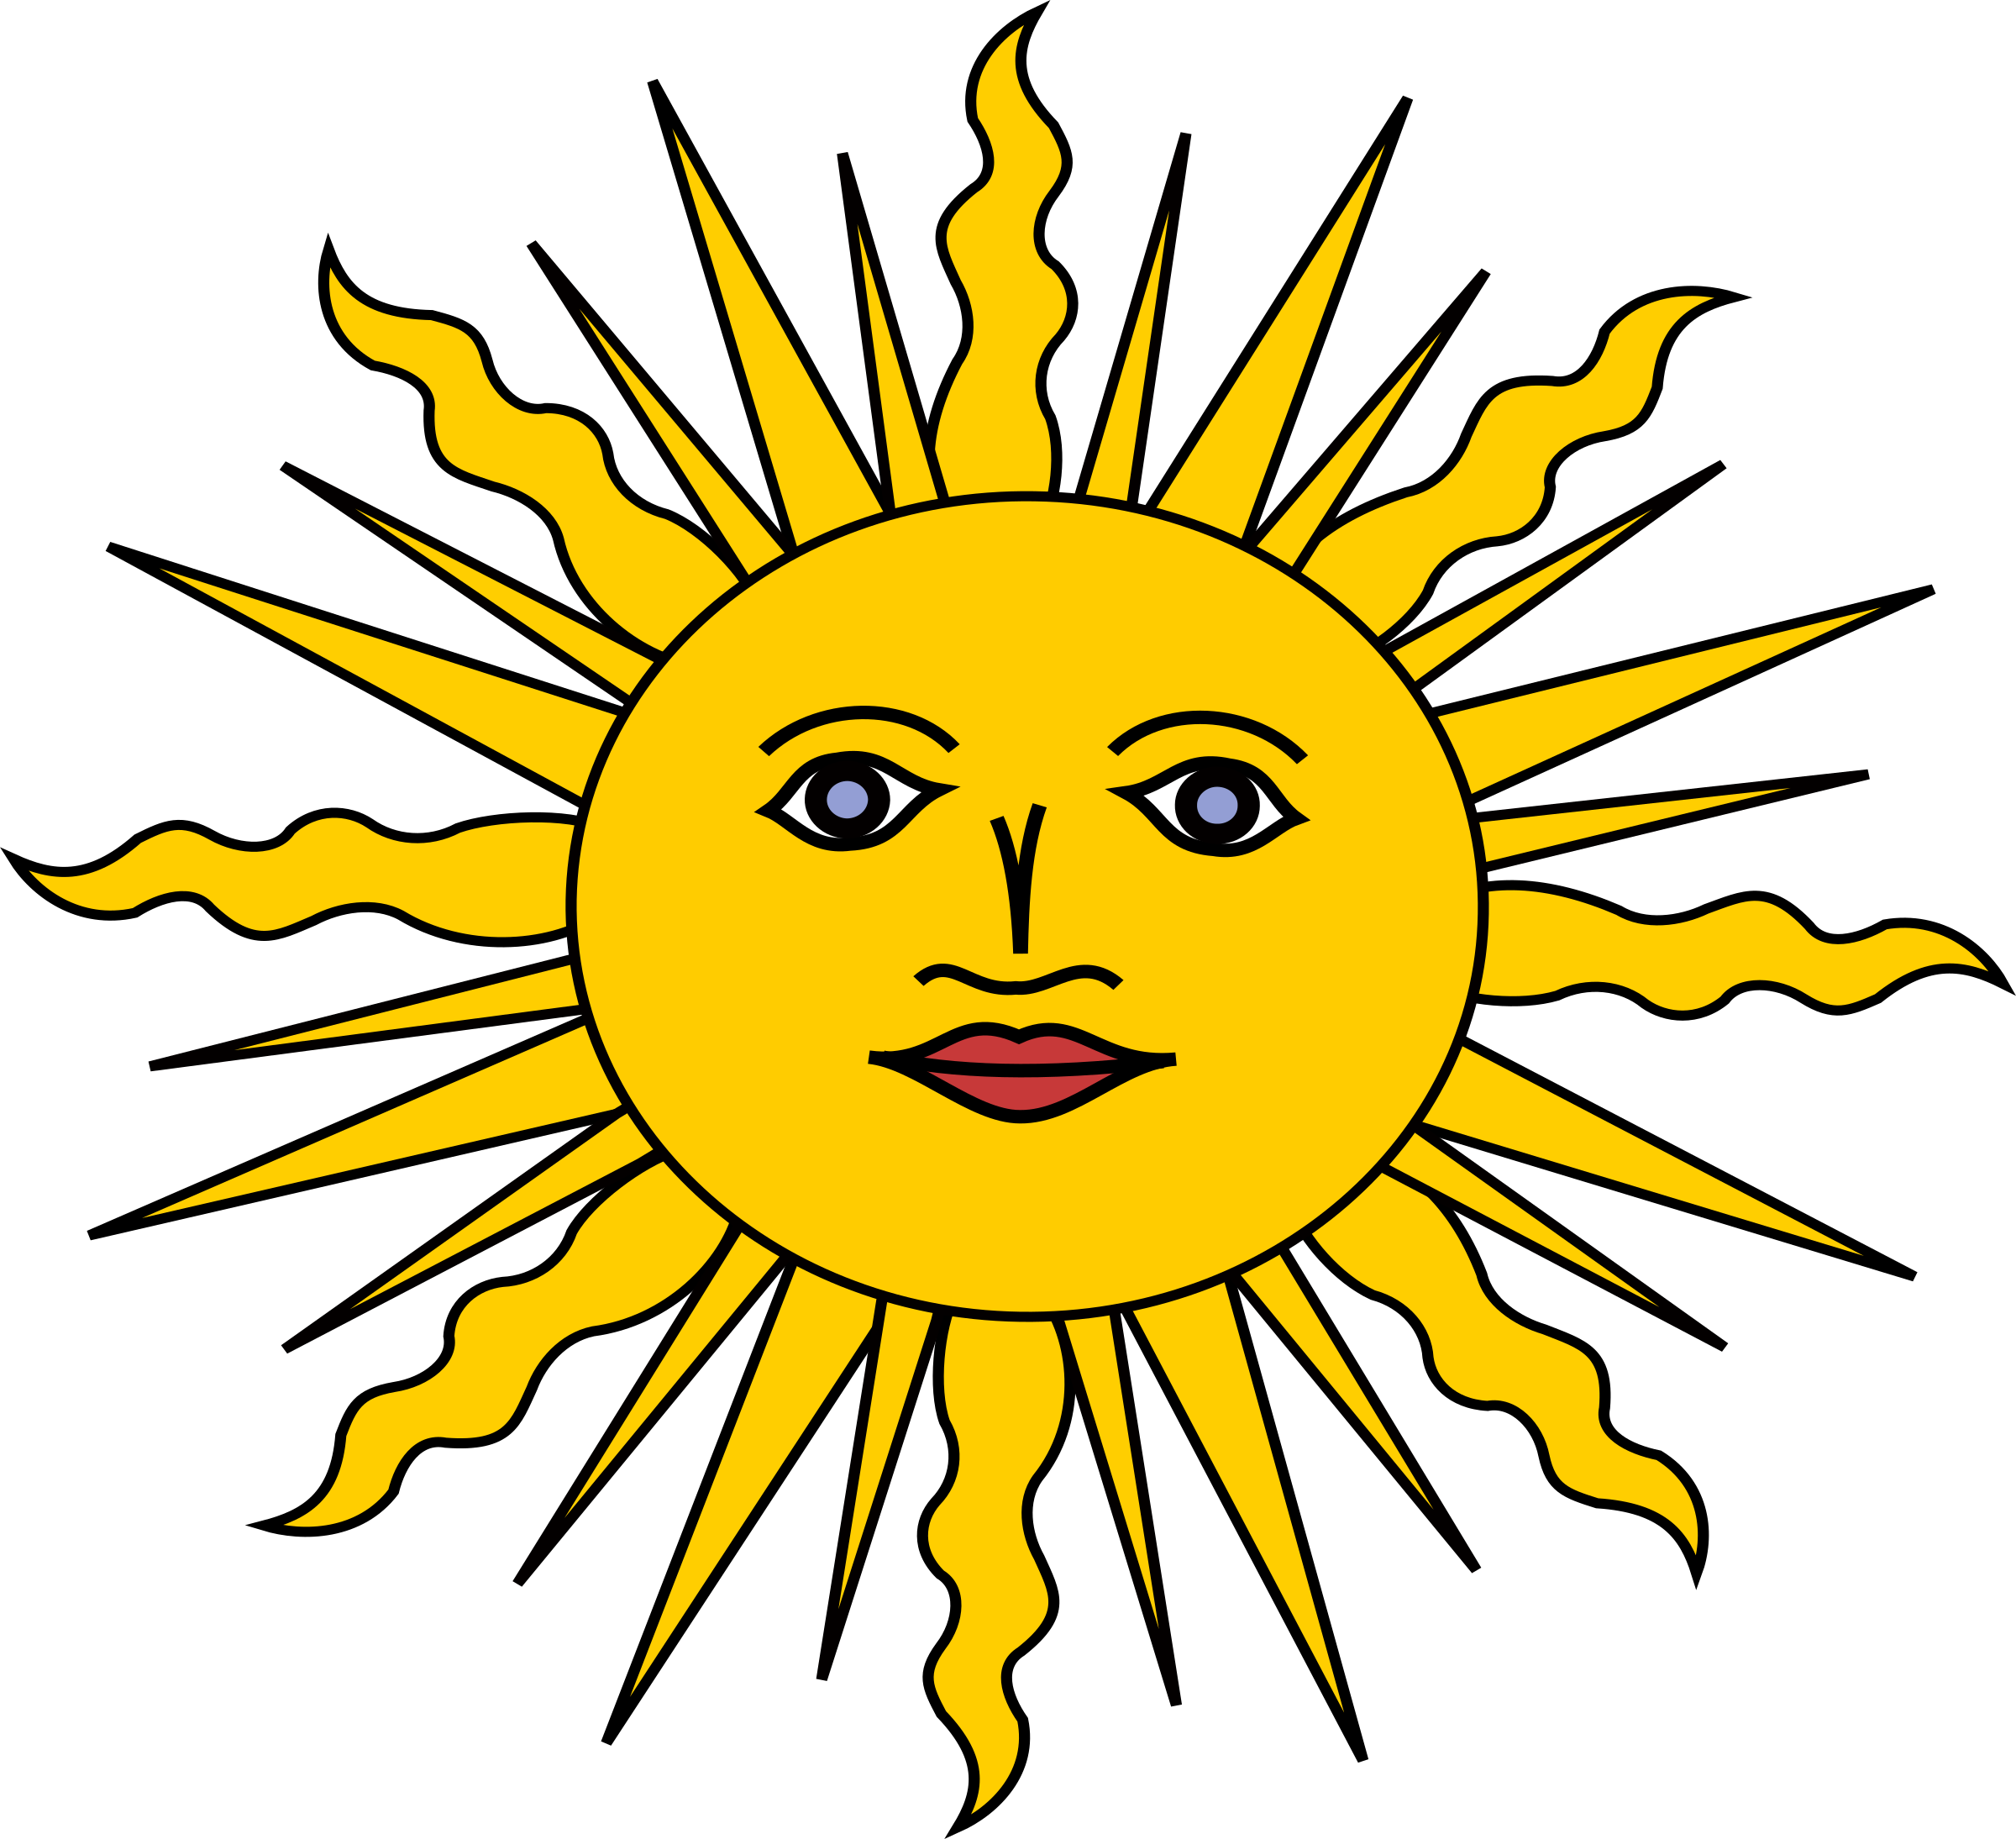 Покажи как нарисовать солнце. Солнце рисунок. Солнышко рисунок. Красивое солнышко. Солнце риконок.